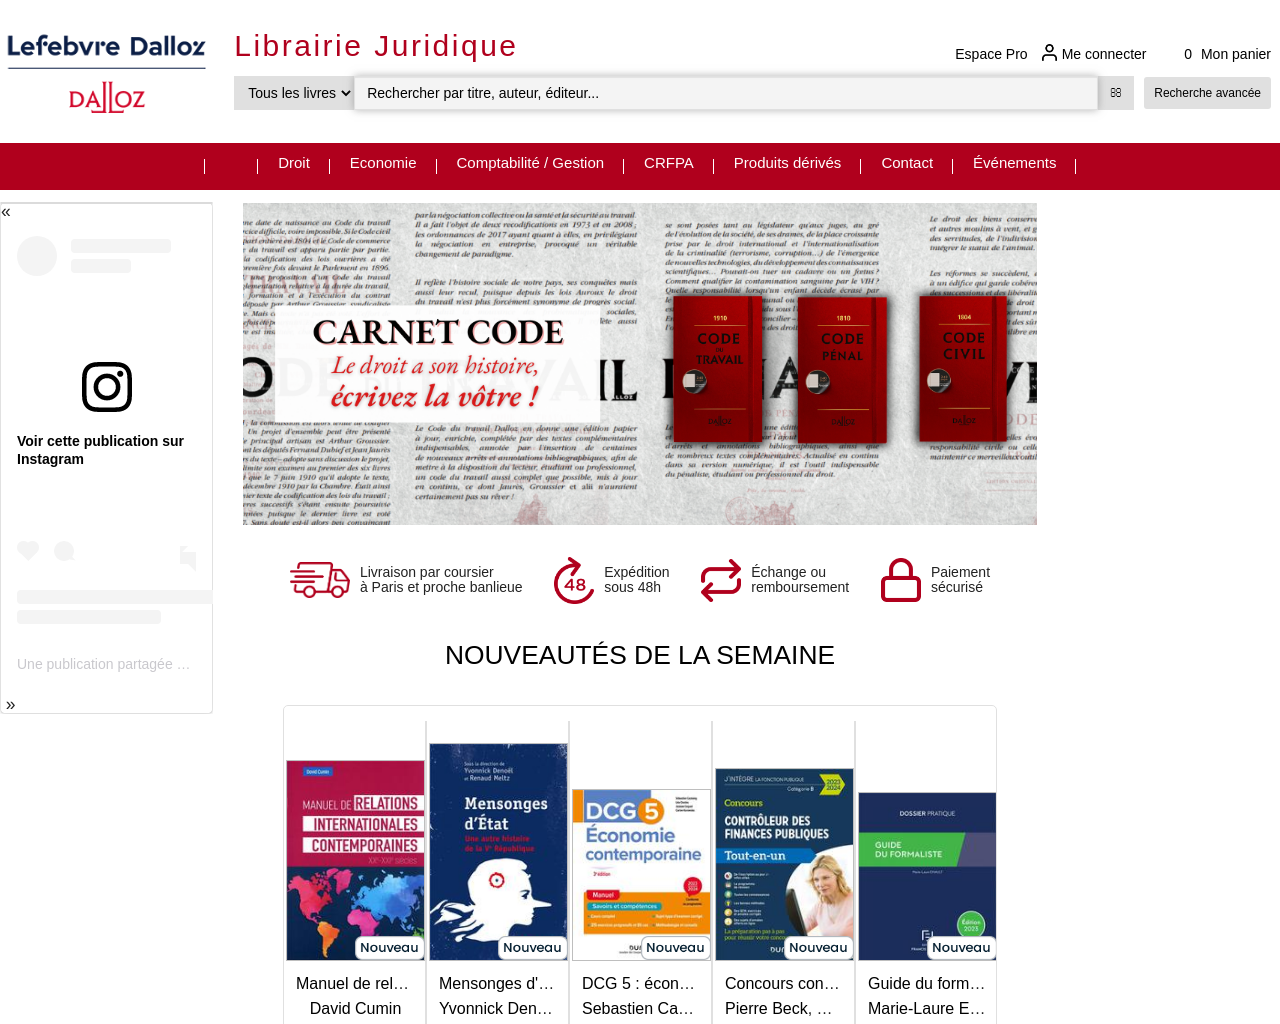 www.librairiedalloz.fr